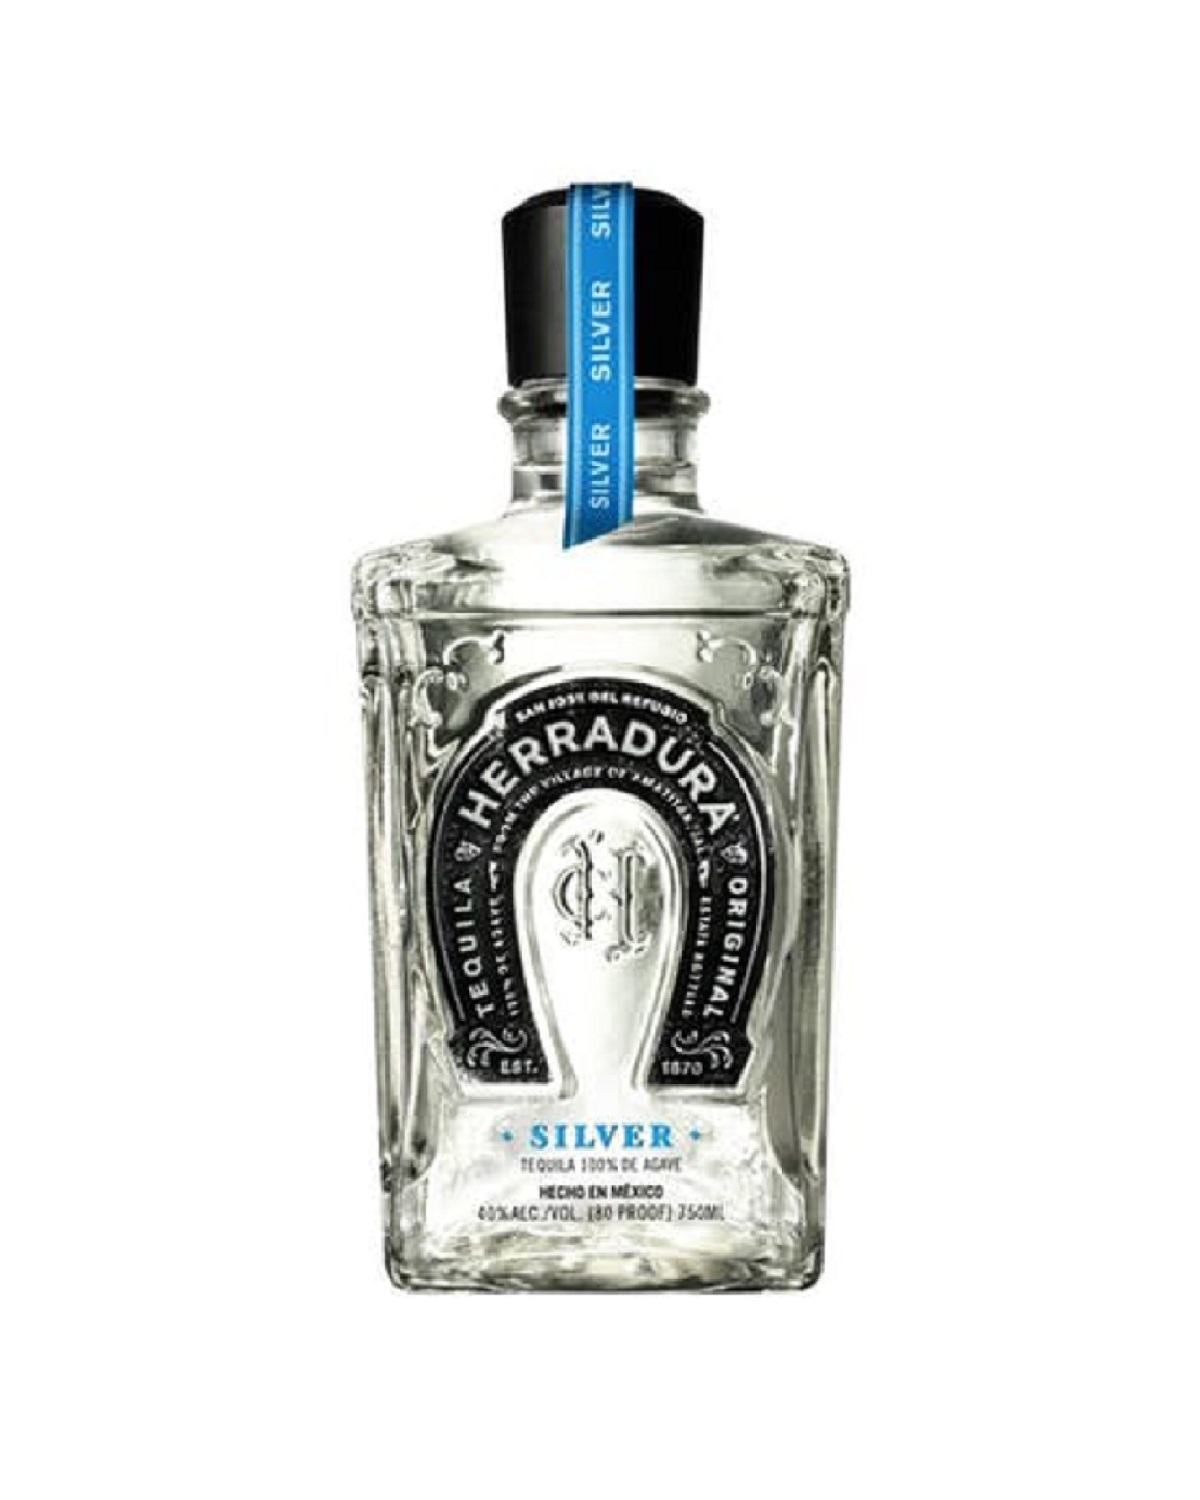 Herradura Silver Tequila 375 mL